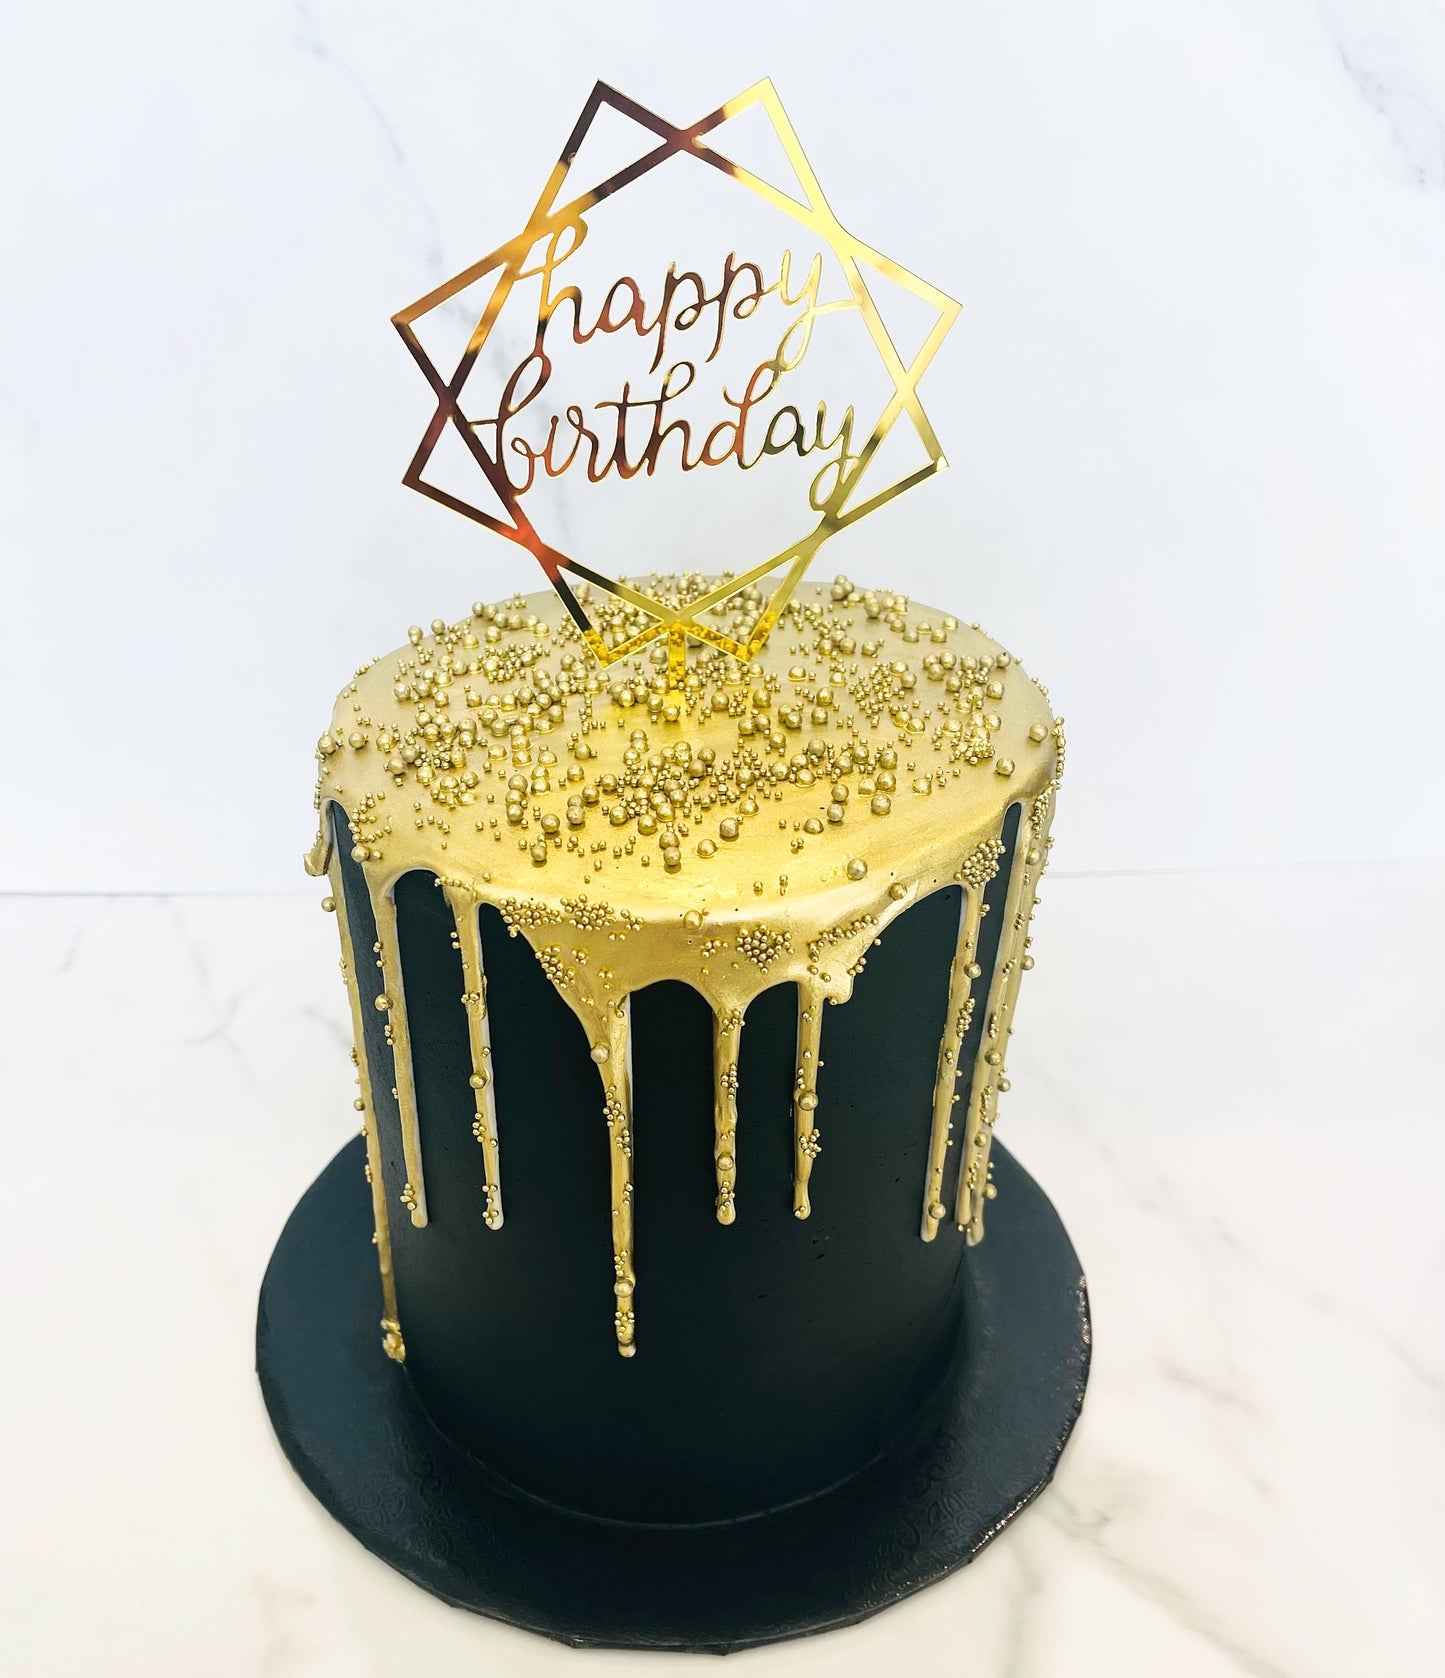 Black & Gold Drip Cake